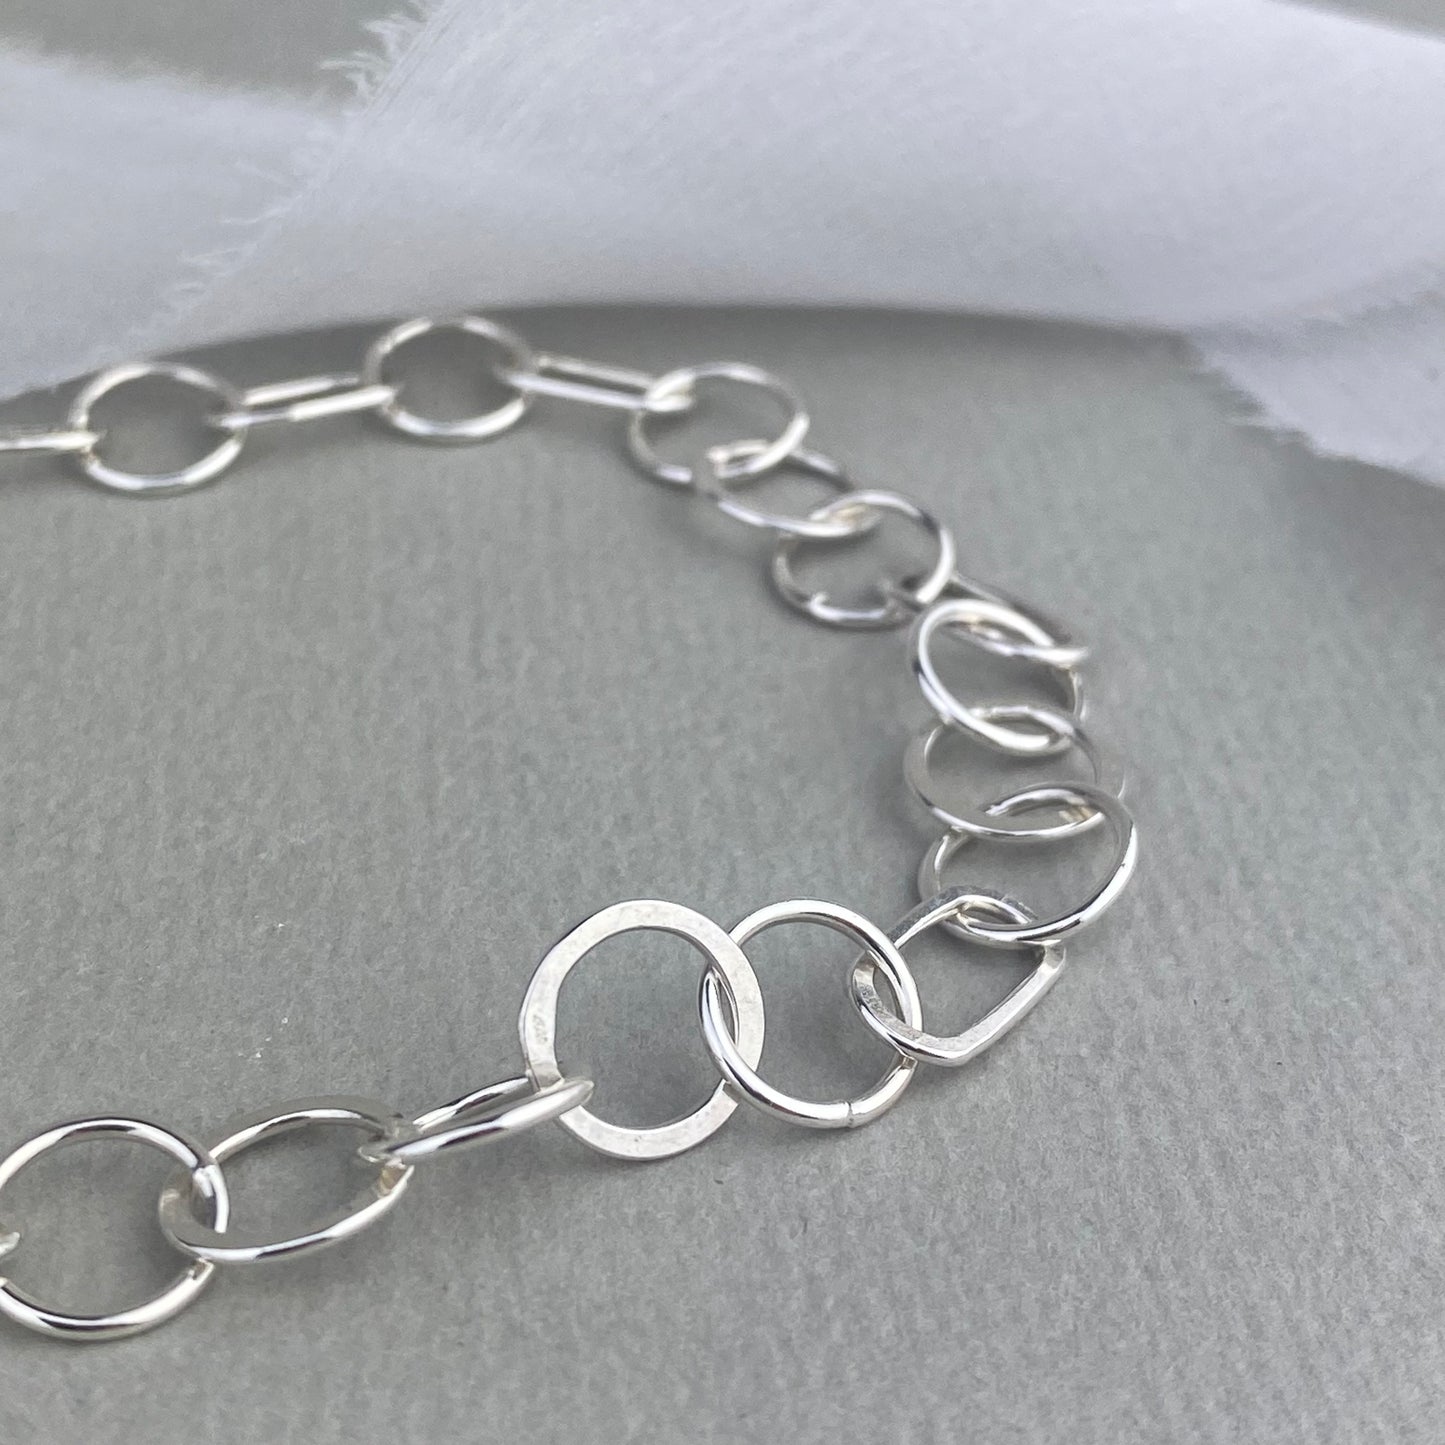 Handmade silver link bracelet